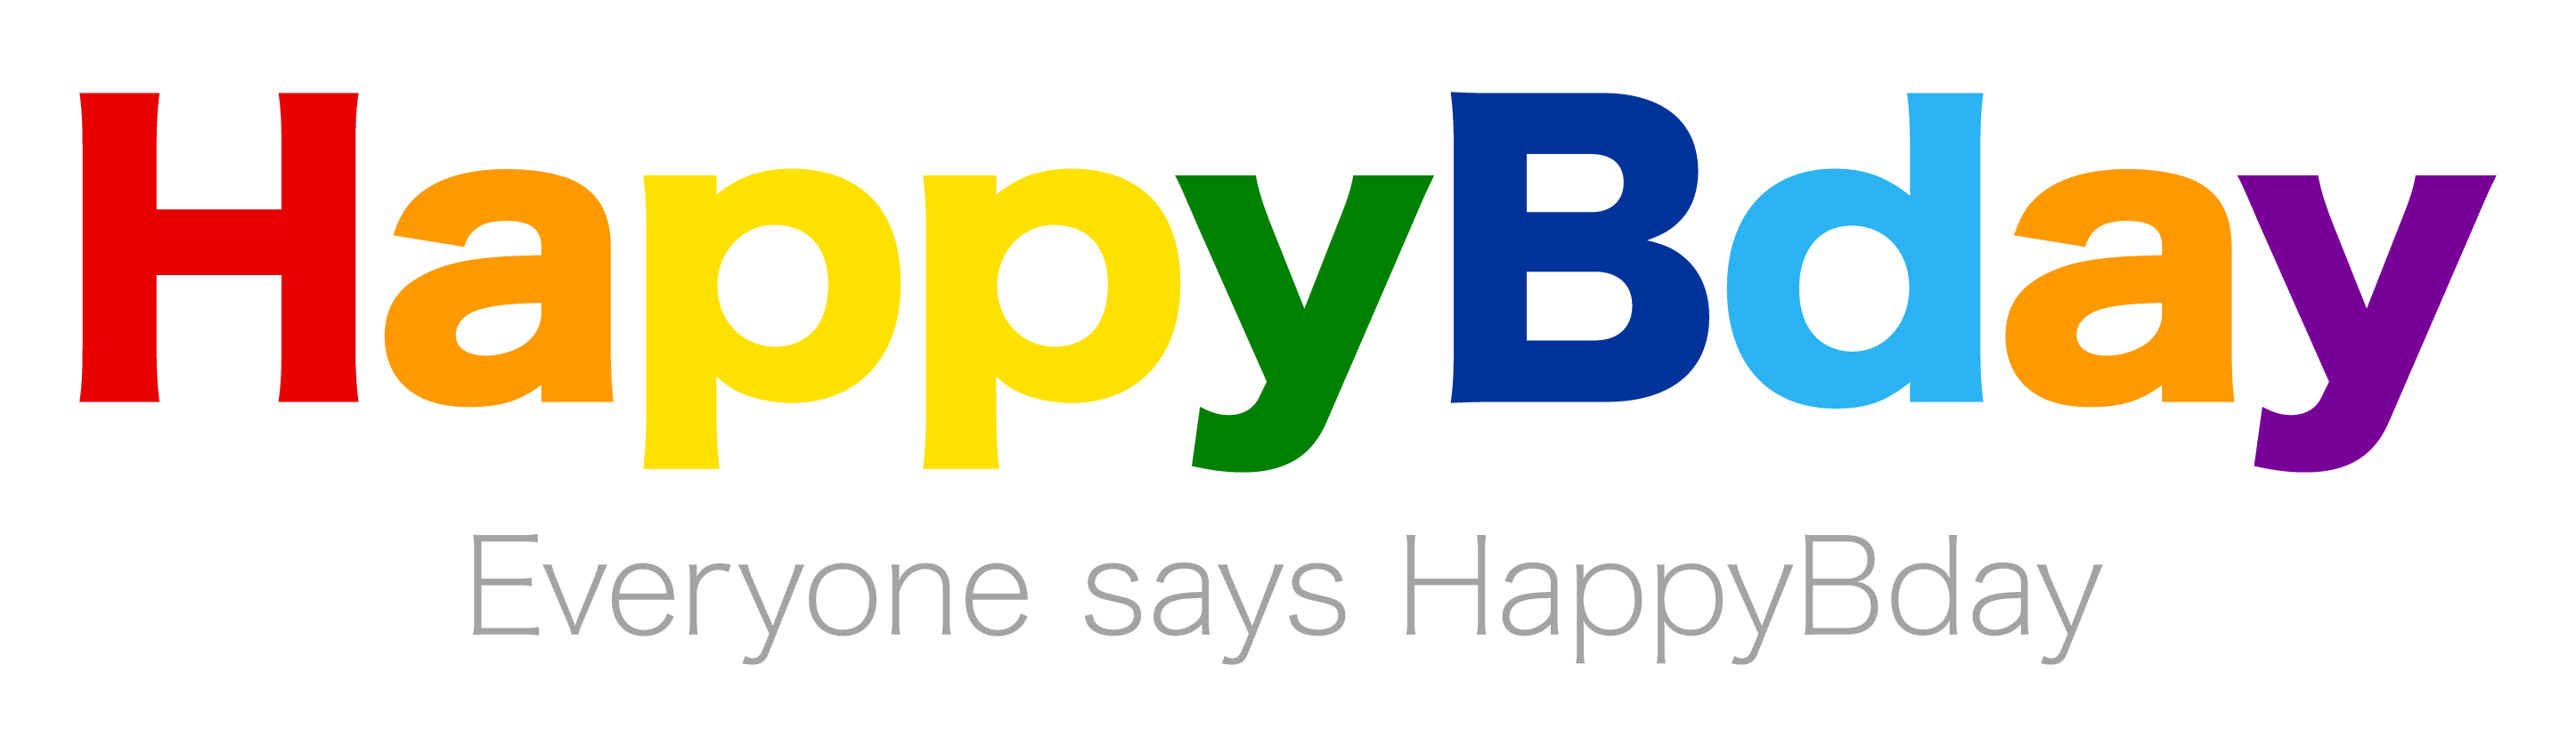 HappyBday Blog